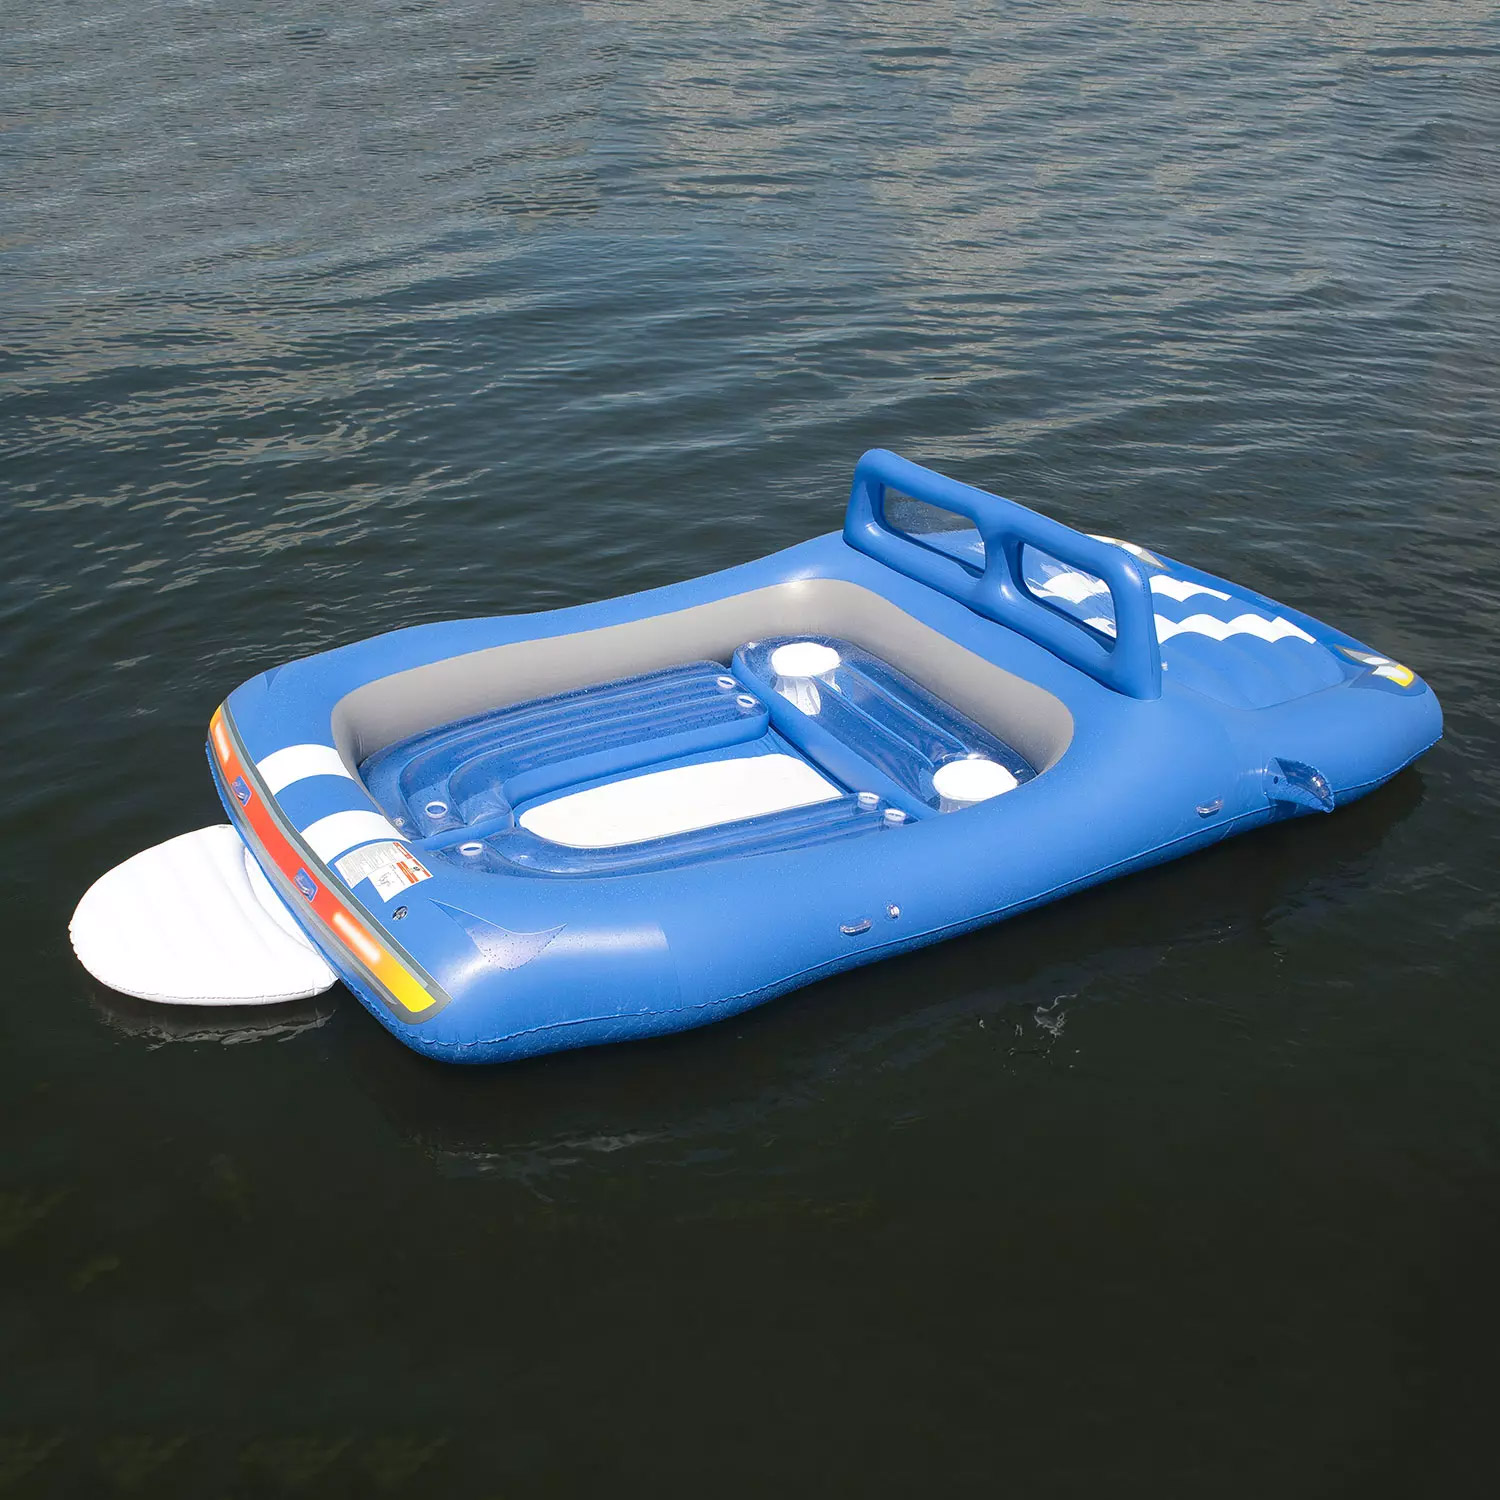 Giant convertible car lake float